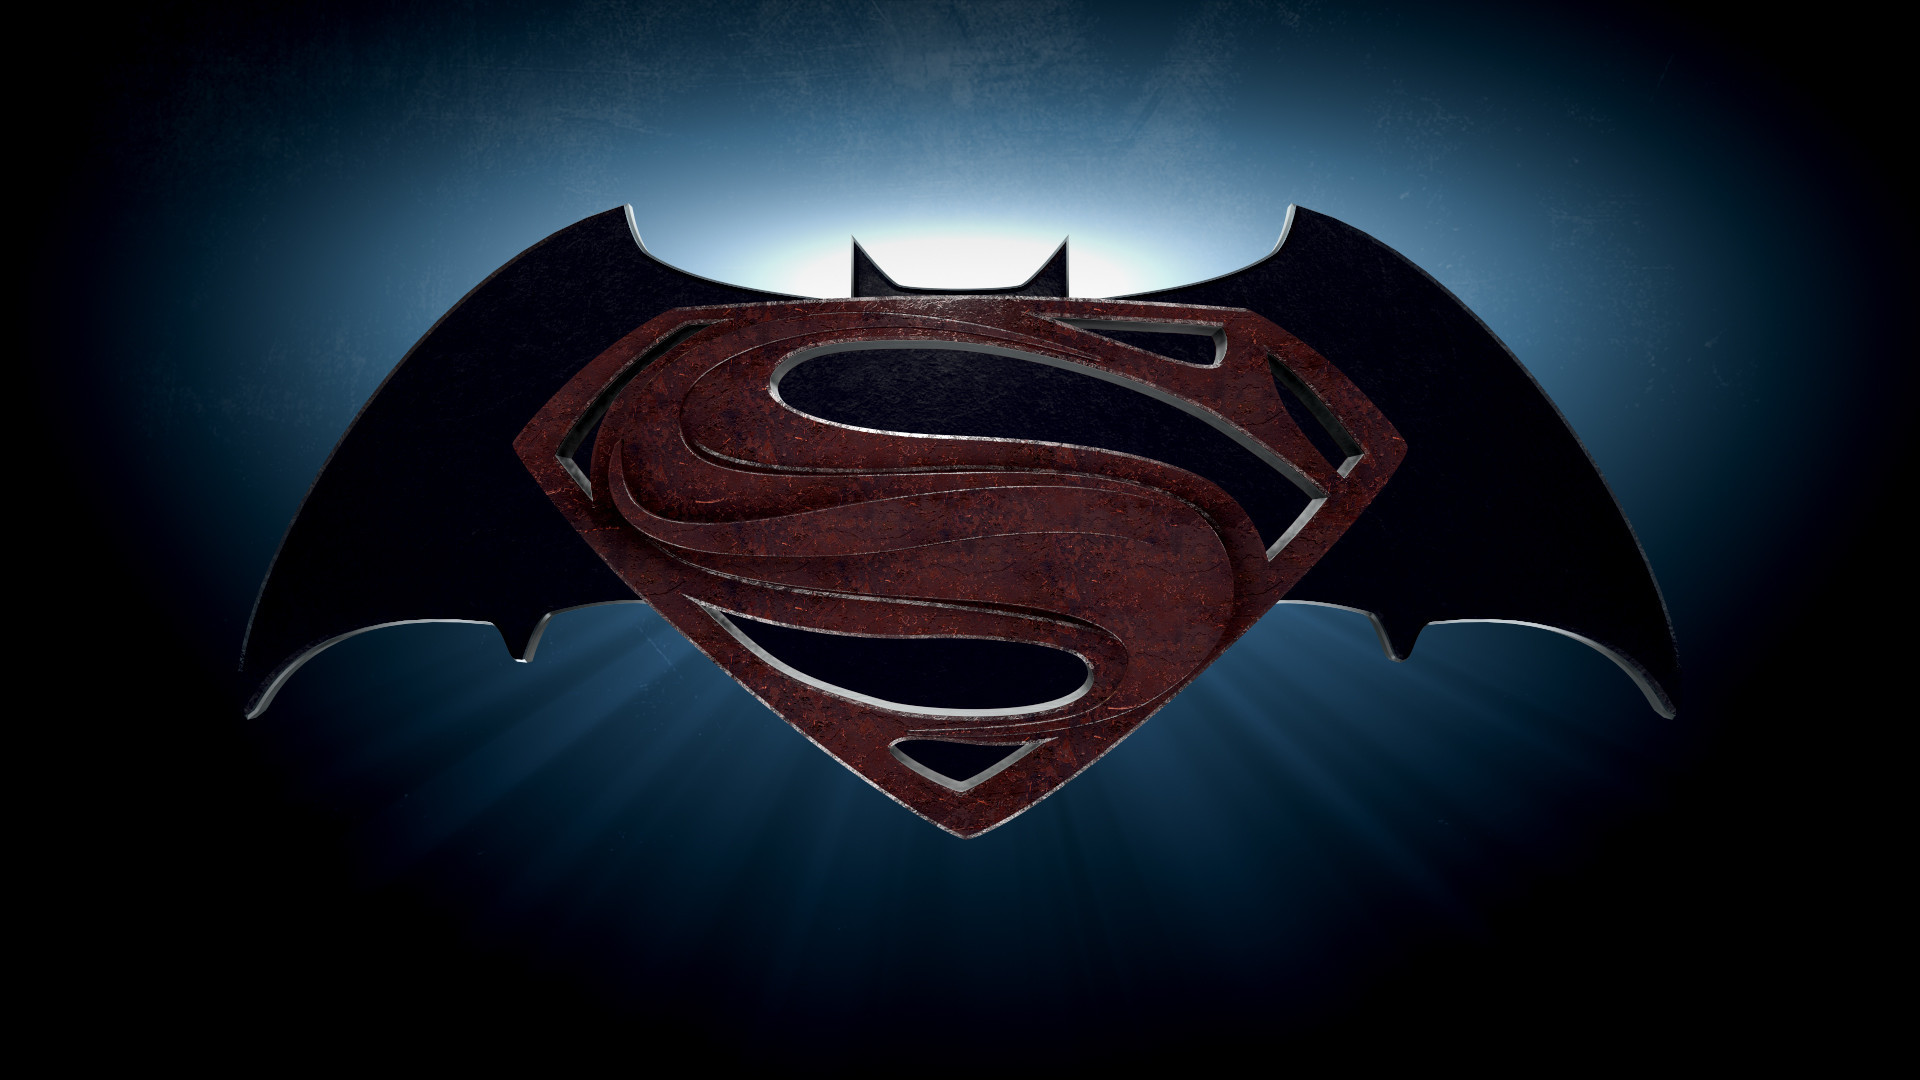 Superman Logo iPhone Wallpaper HD